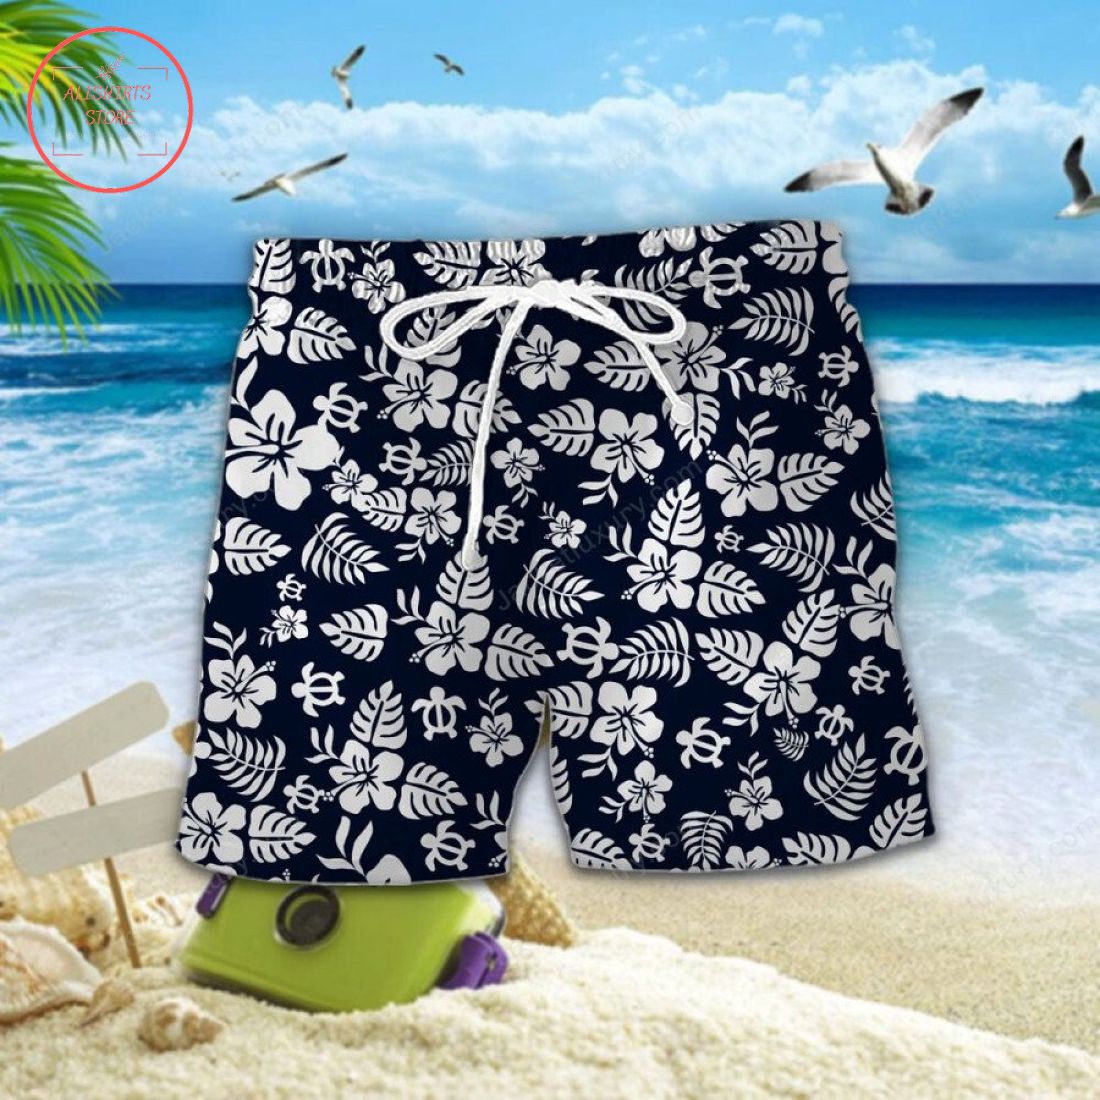 Millwall FC Aloha Hawaiian Shirt and Beach Shorts